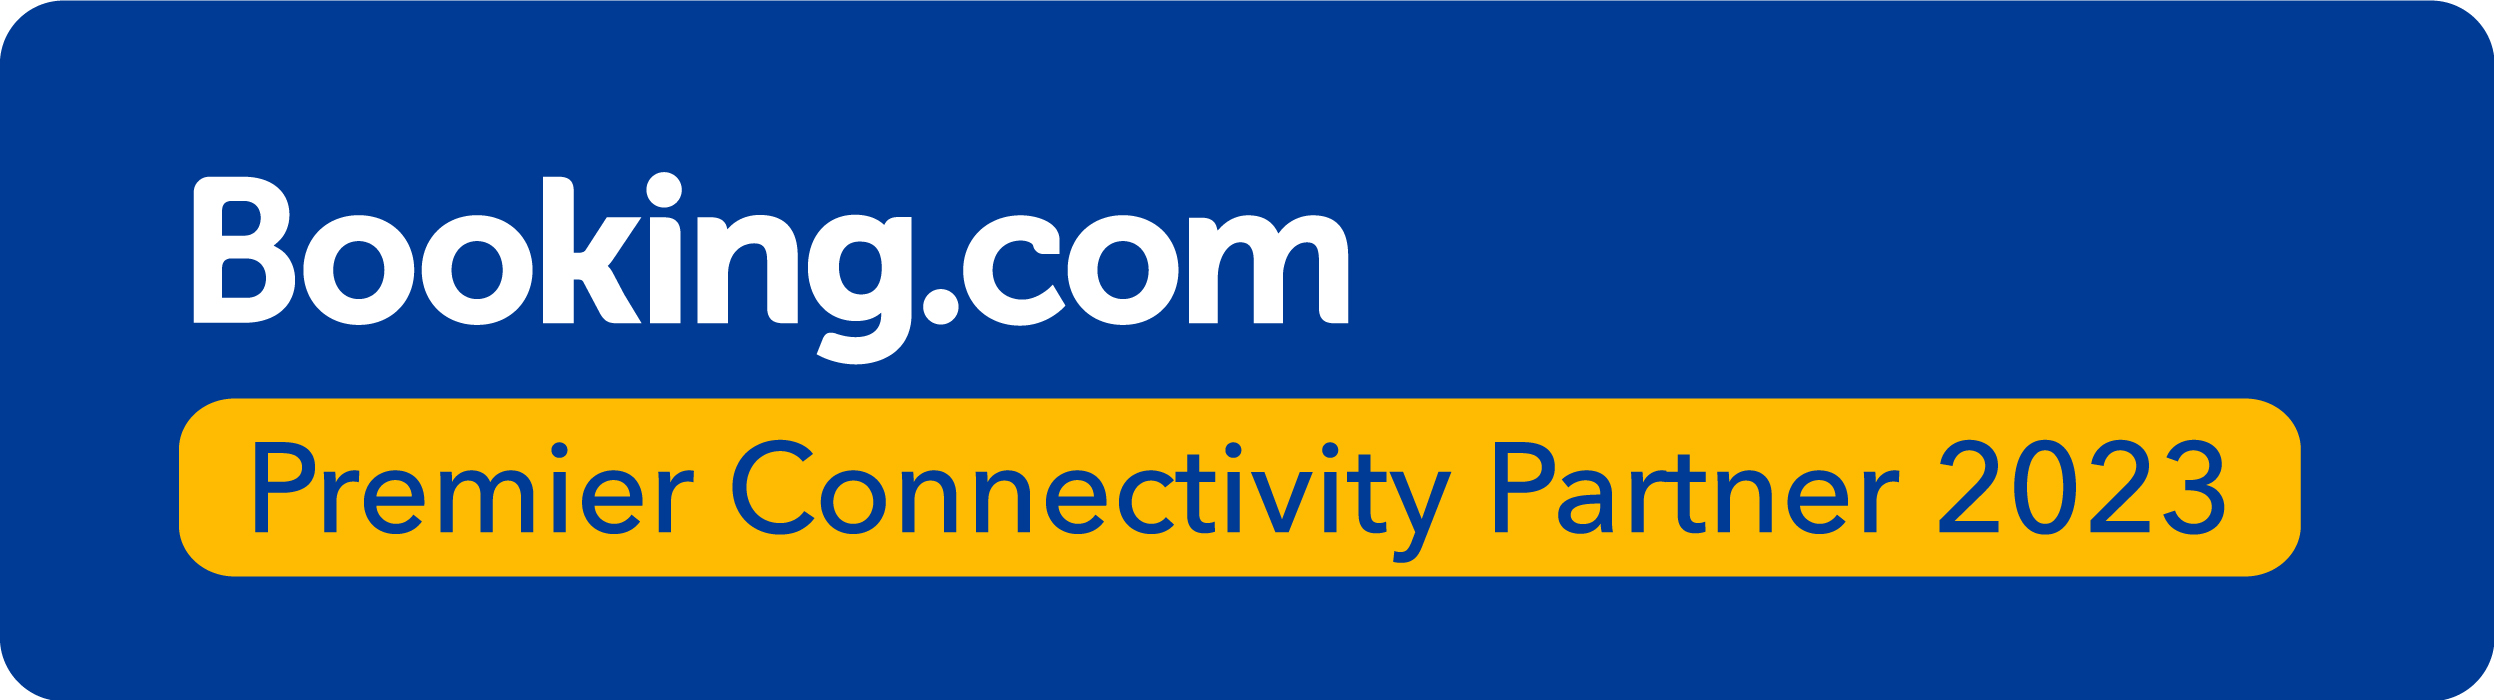 Booking.com premier partner logo